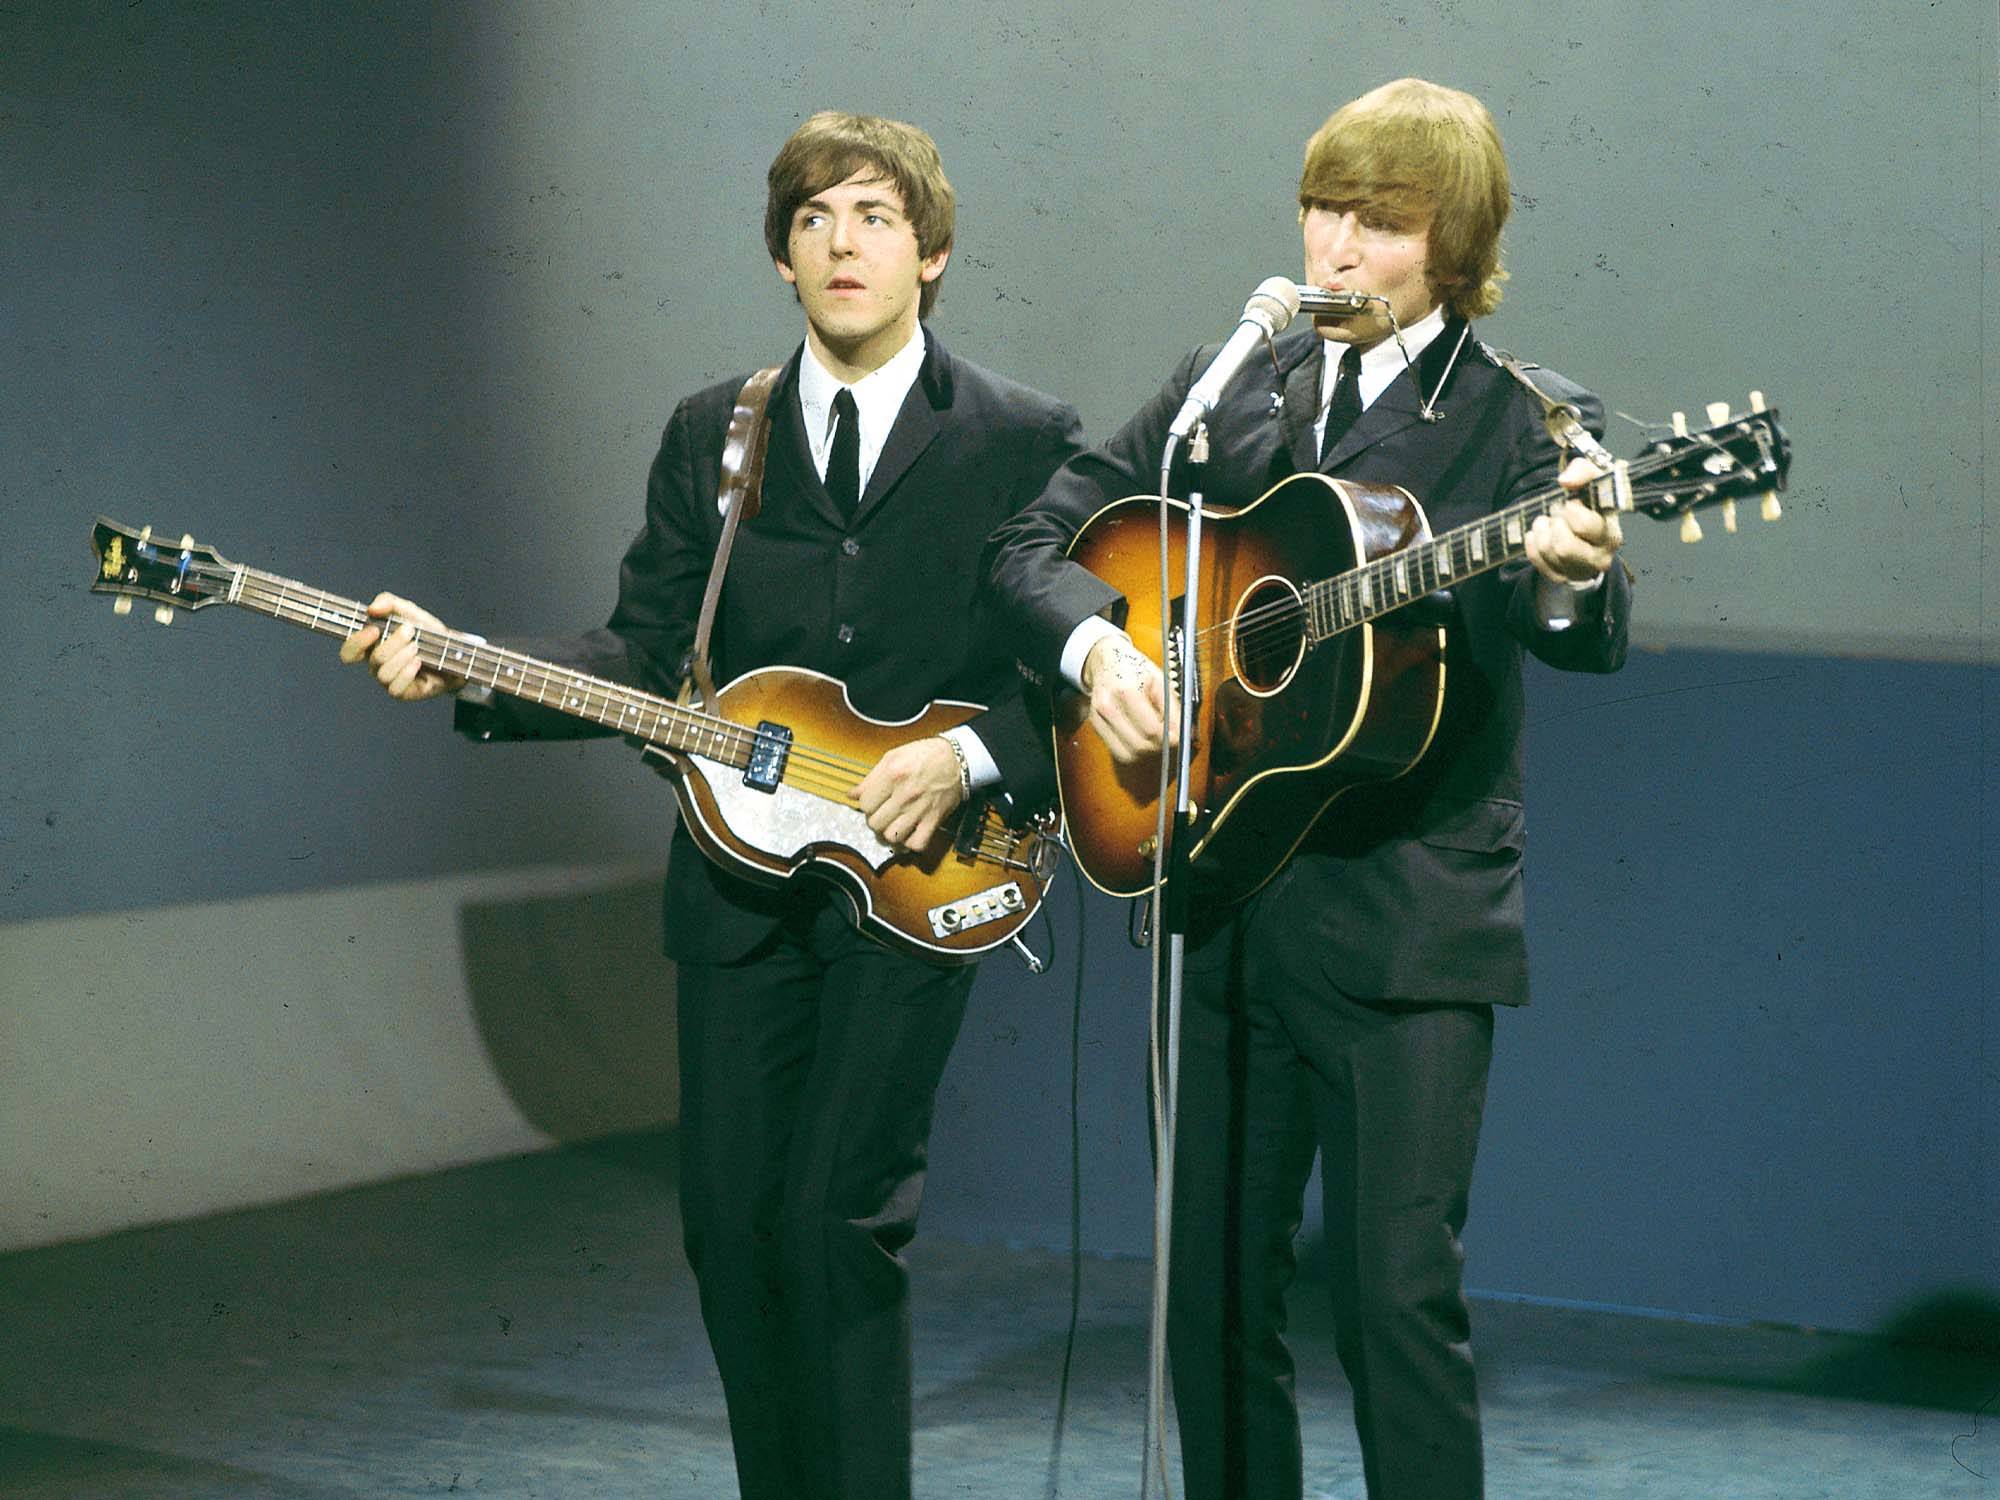 Paul-McCartney-John-Lennon-Photo-David-Redfern-Redferns@2000x1500